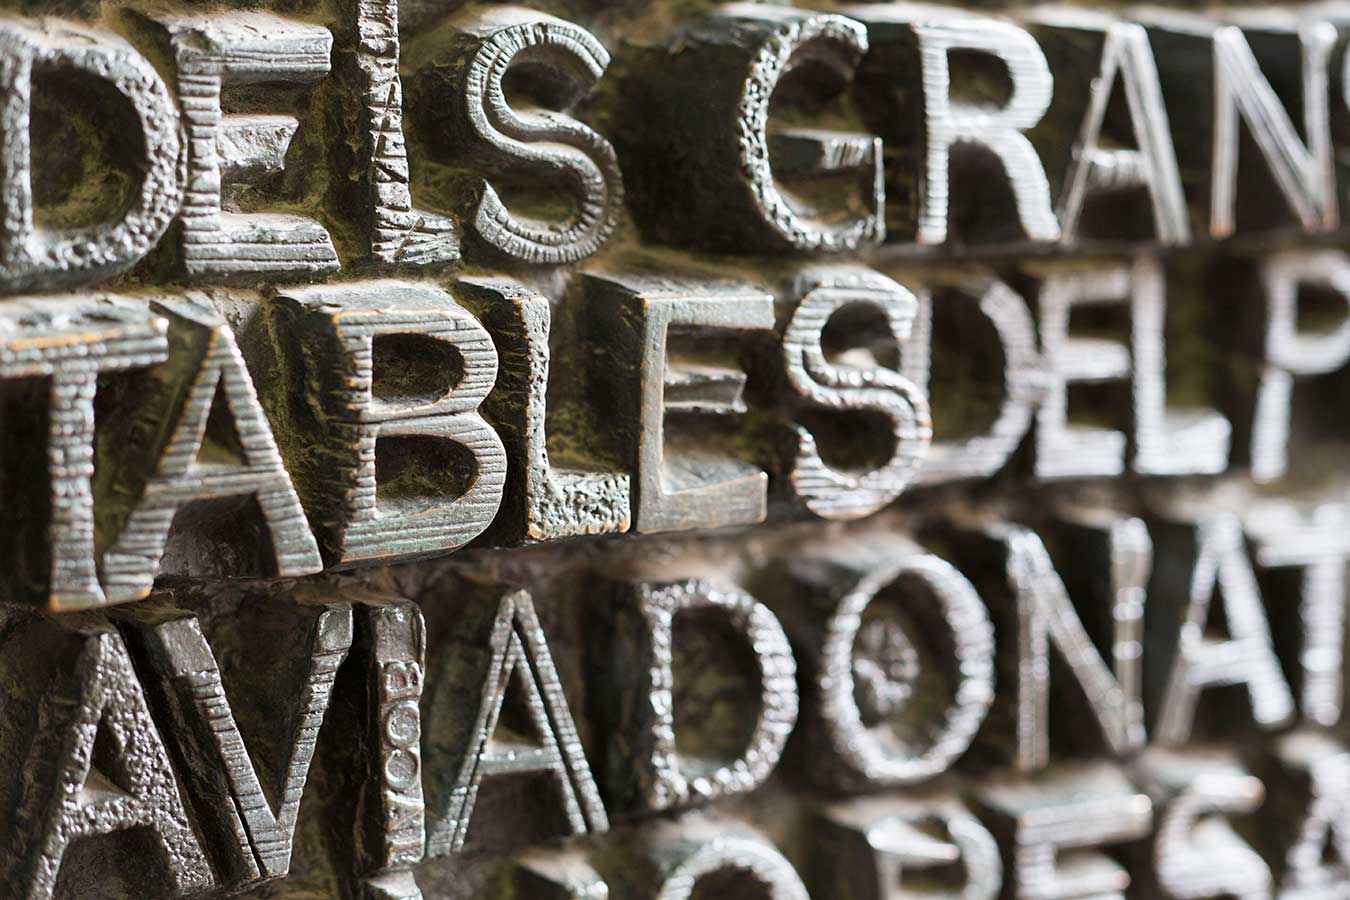 Bogstaver designet af Josep María Subirachs på indgangsportalen - Korsfæstelsesfacaden